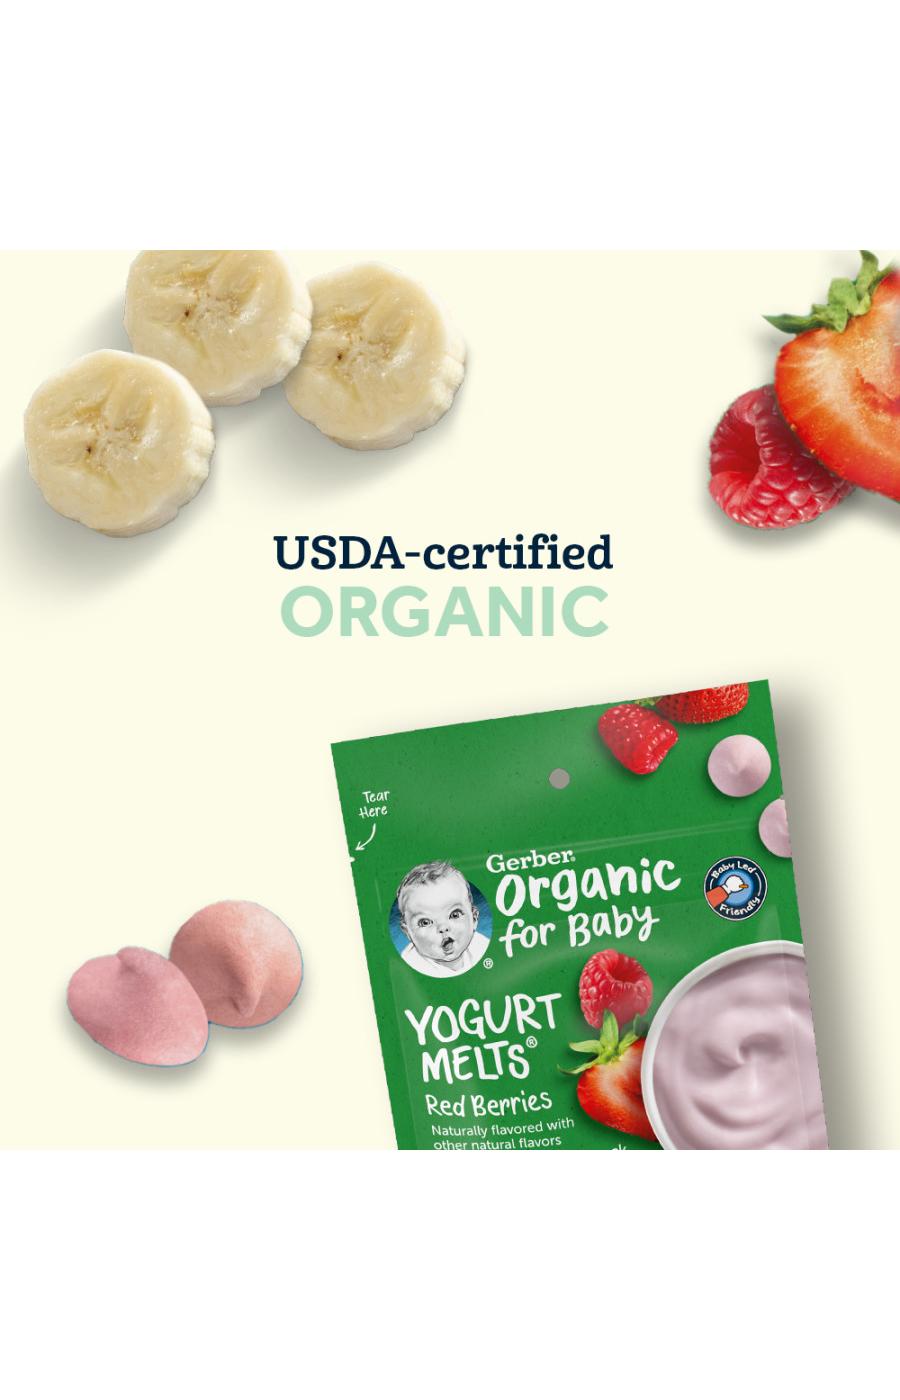 Gerber Organics for Baby Yogurt Melts - Red Berries; image 6 of 8